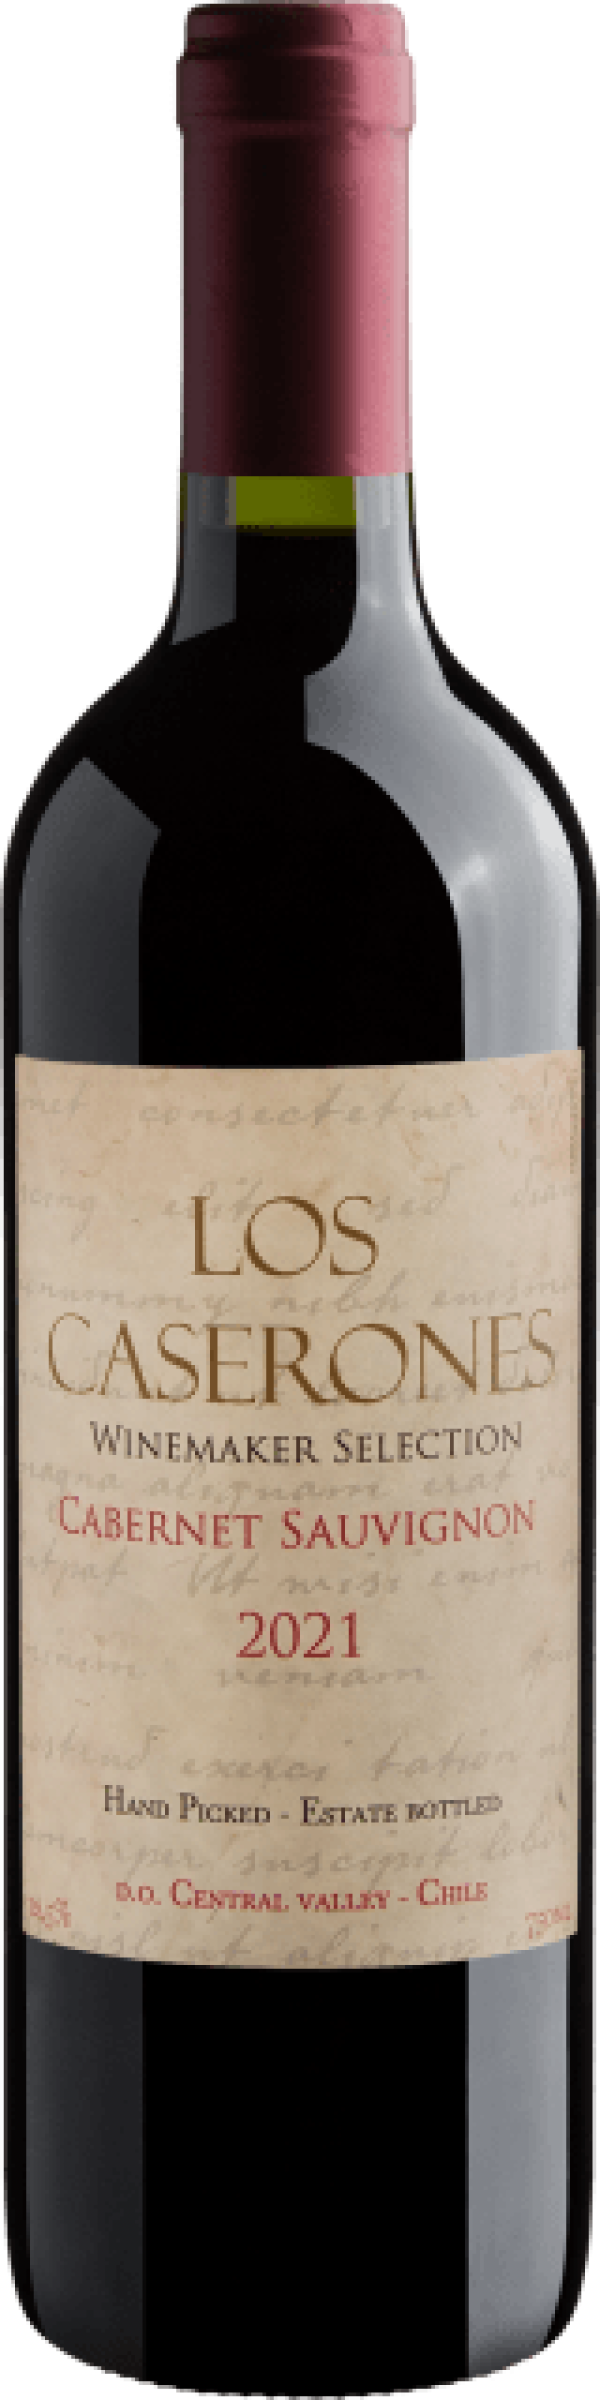 Los Caserones Winemaker Selection Cabernet Sauvignon Central Valley D.O. 2021